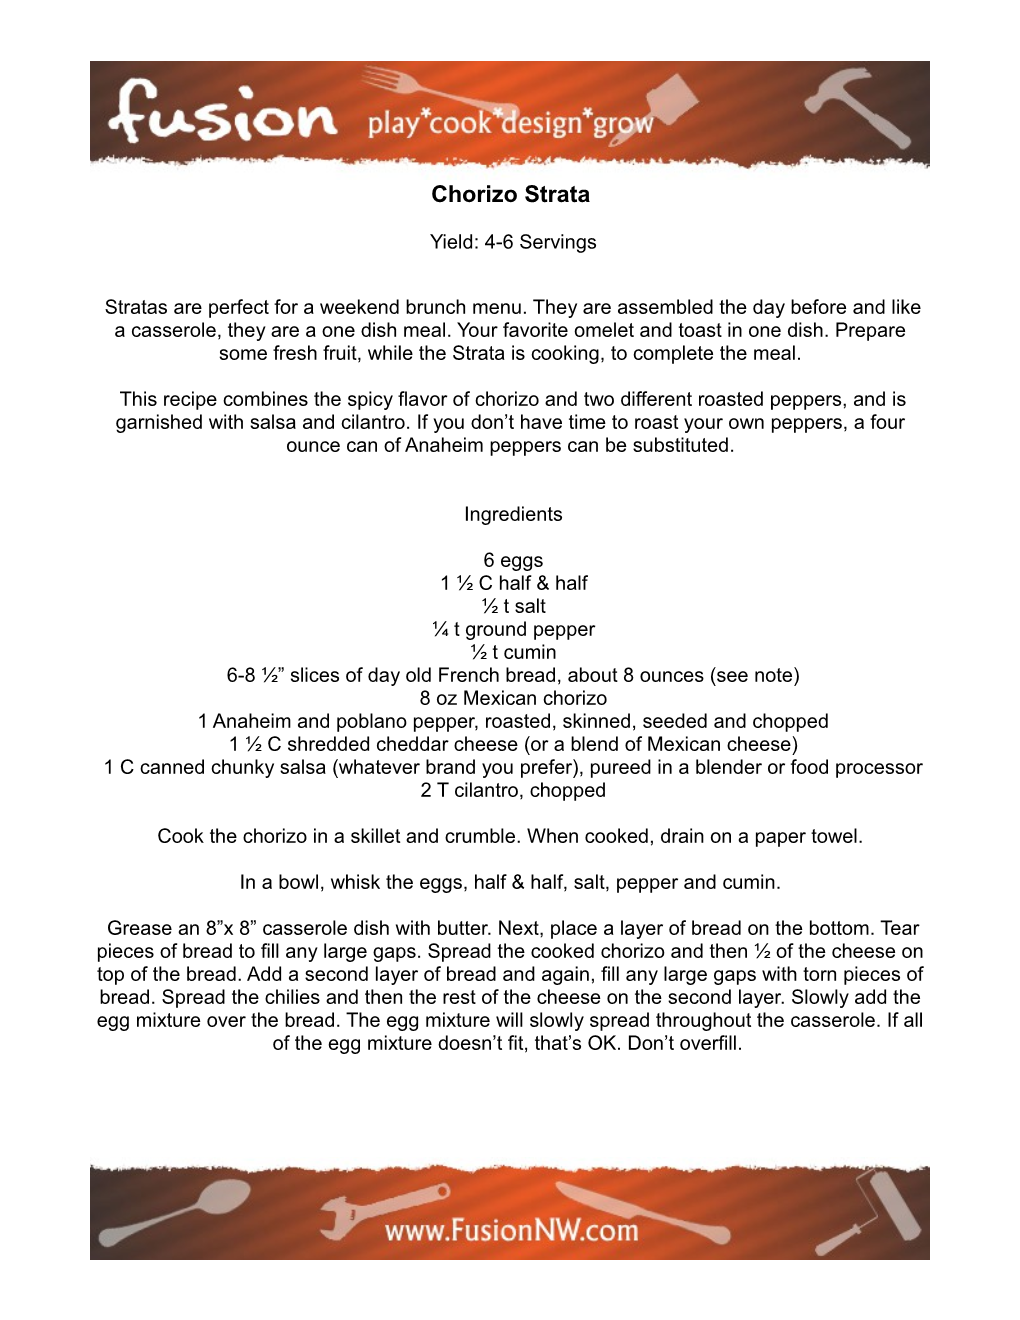 Chorizo Strata Yield: 4-6 Servings